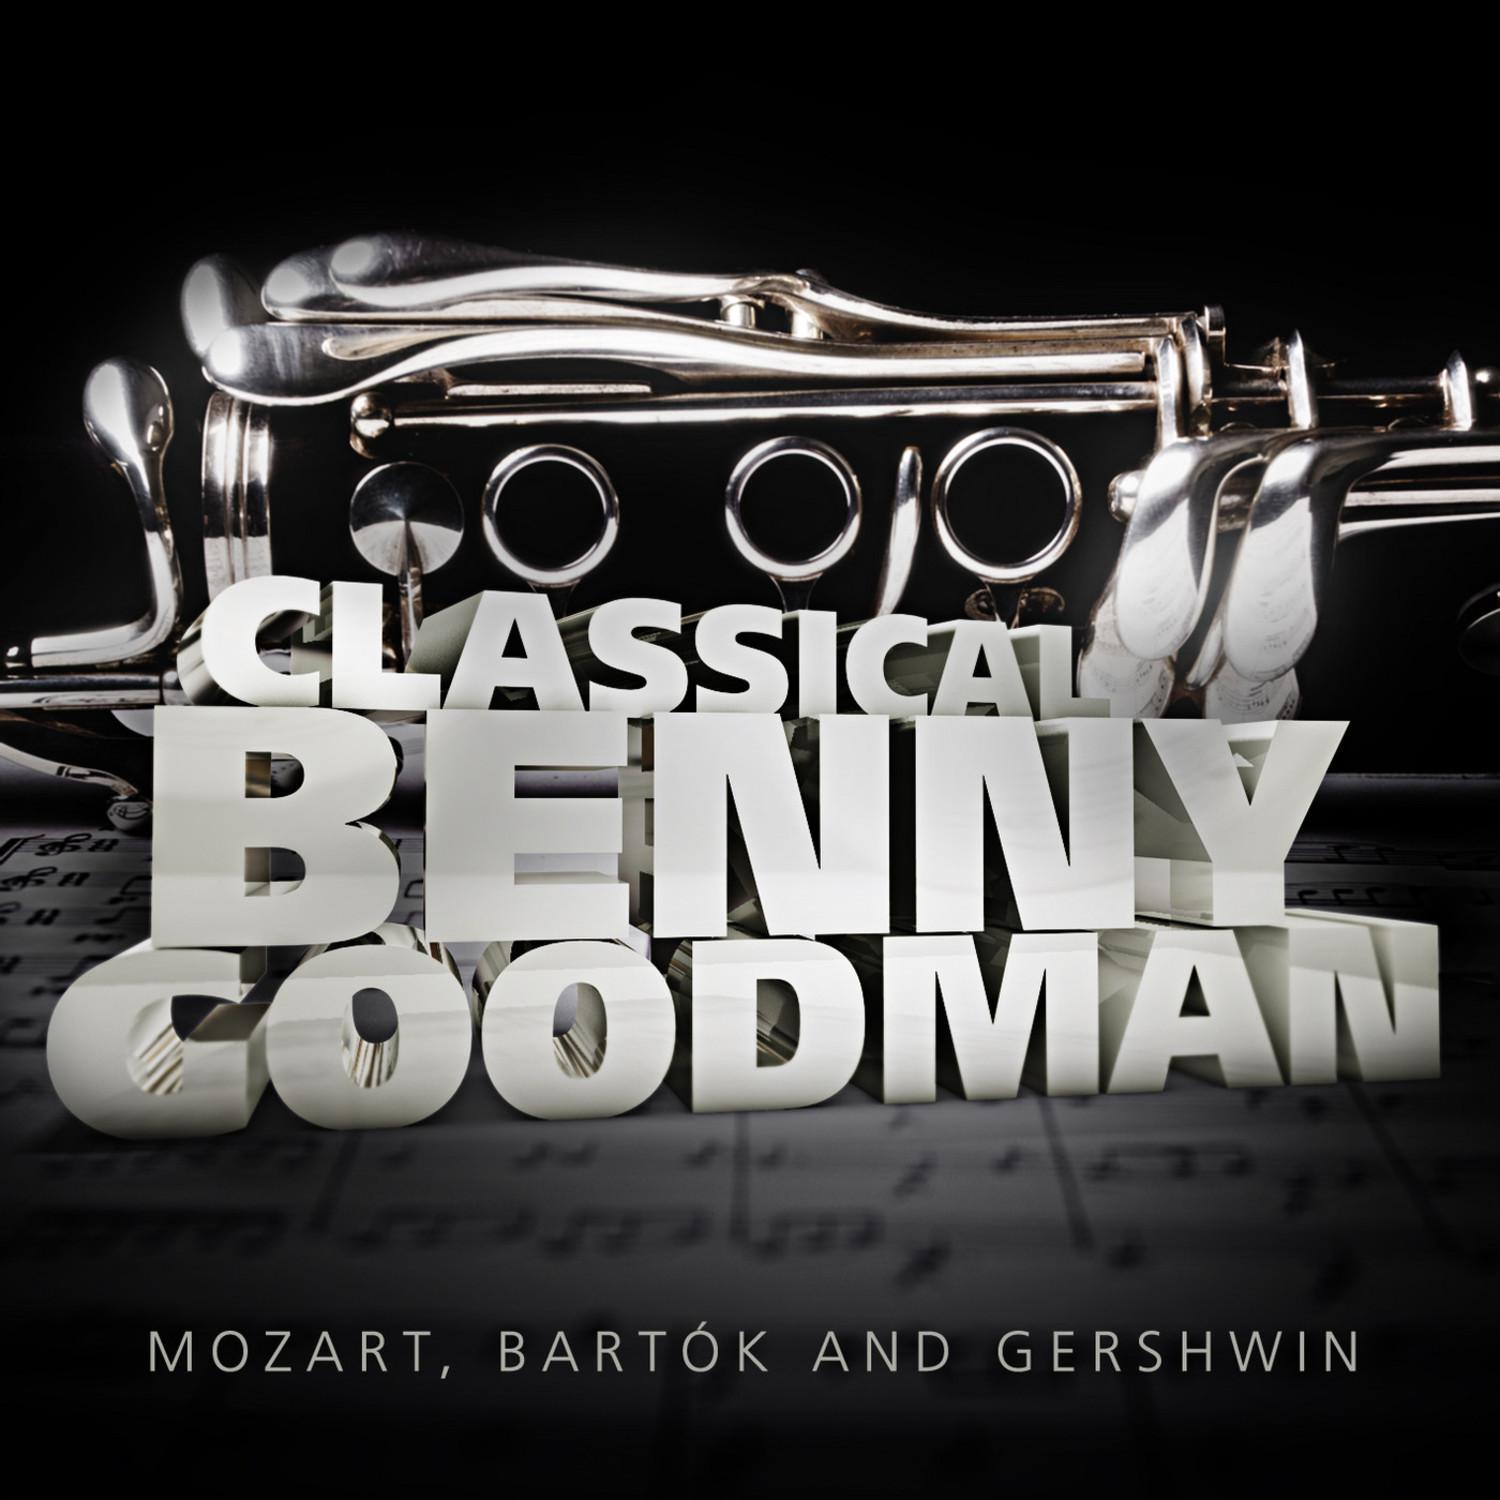 Classical Benny Goodman: Mozart, Barto k and Gershwin